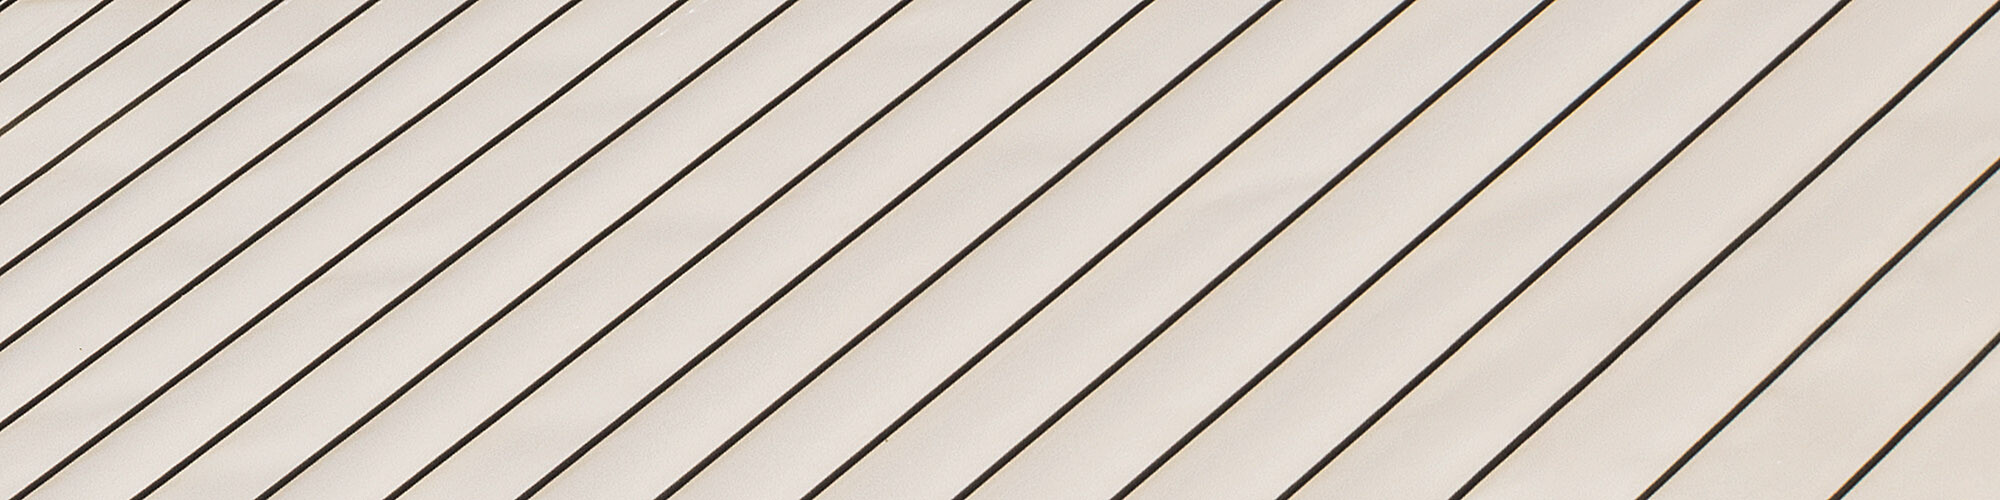 Close-up of the straight PREFA aluminum trays.